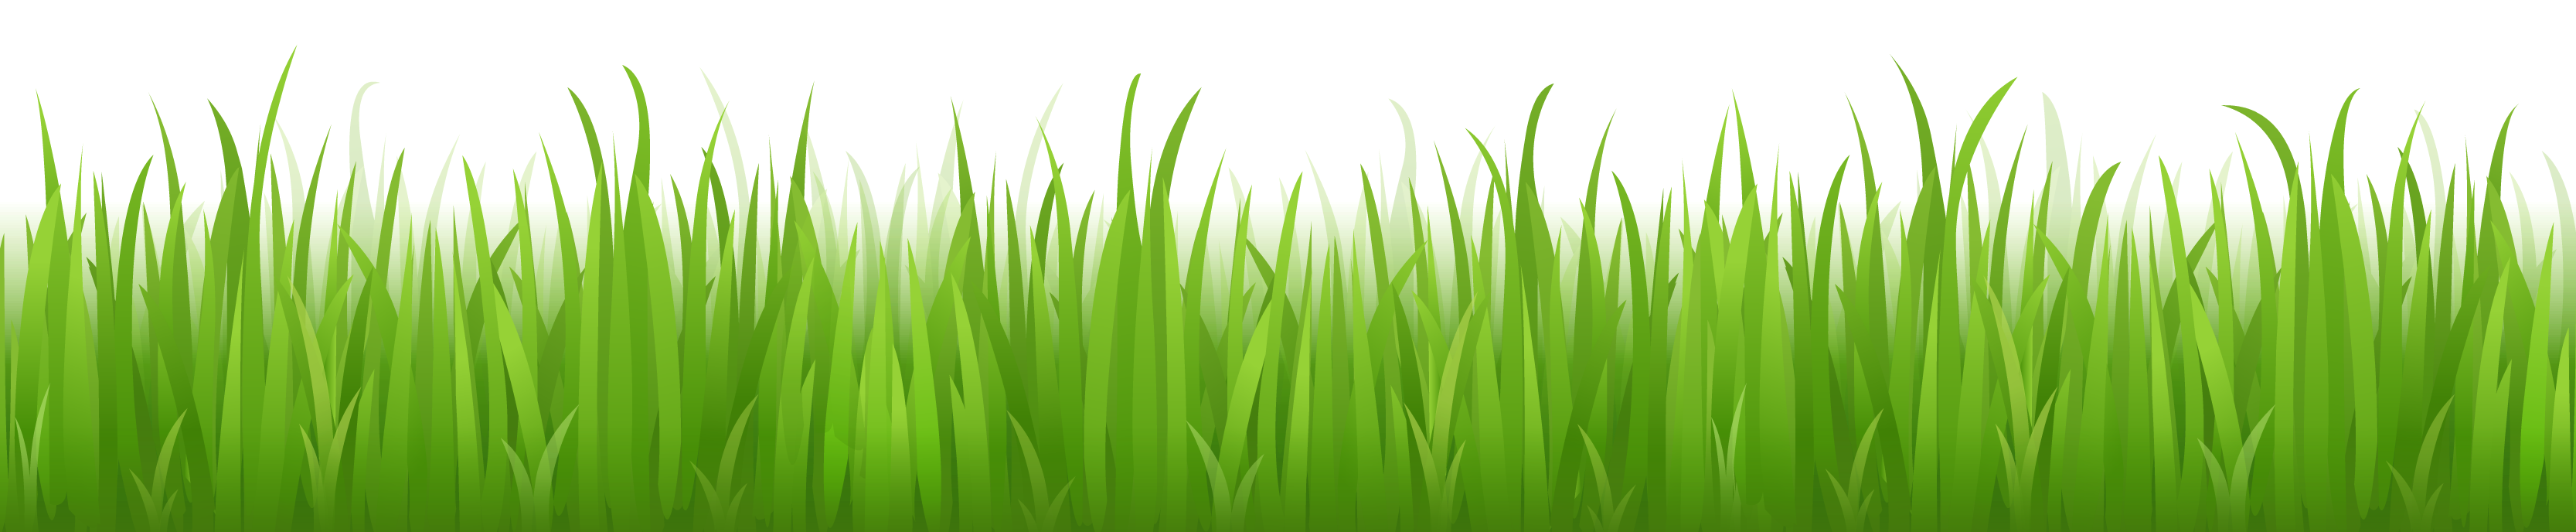 Green grass clipart - Clipground